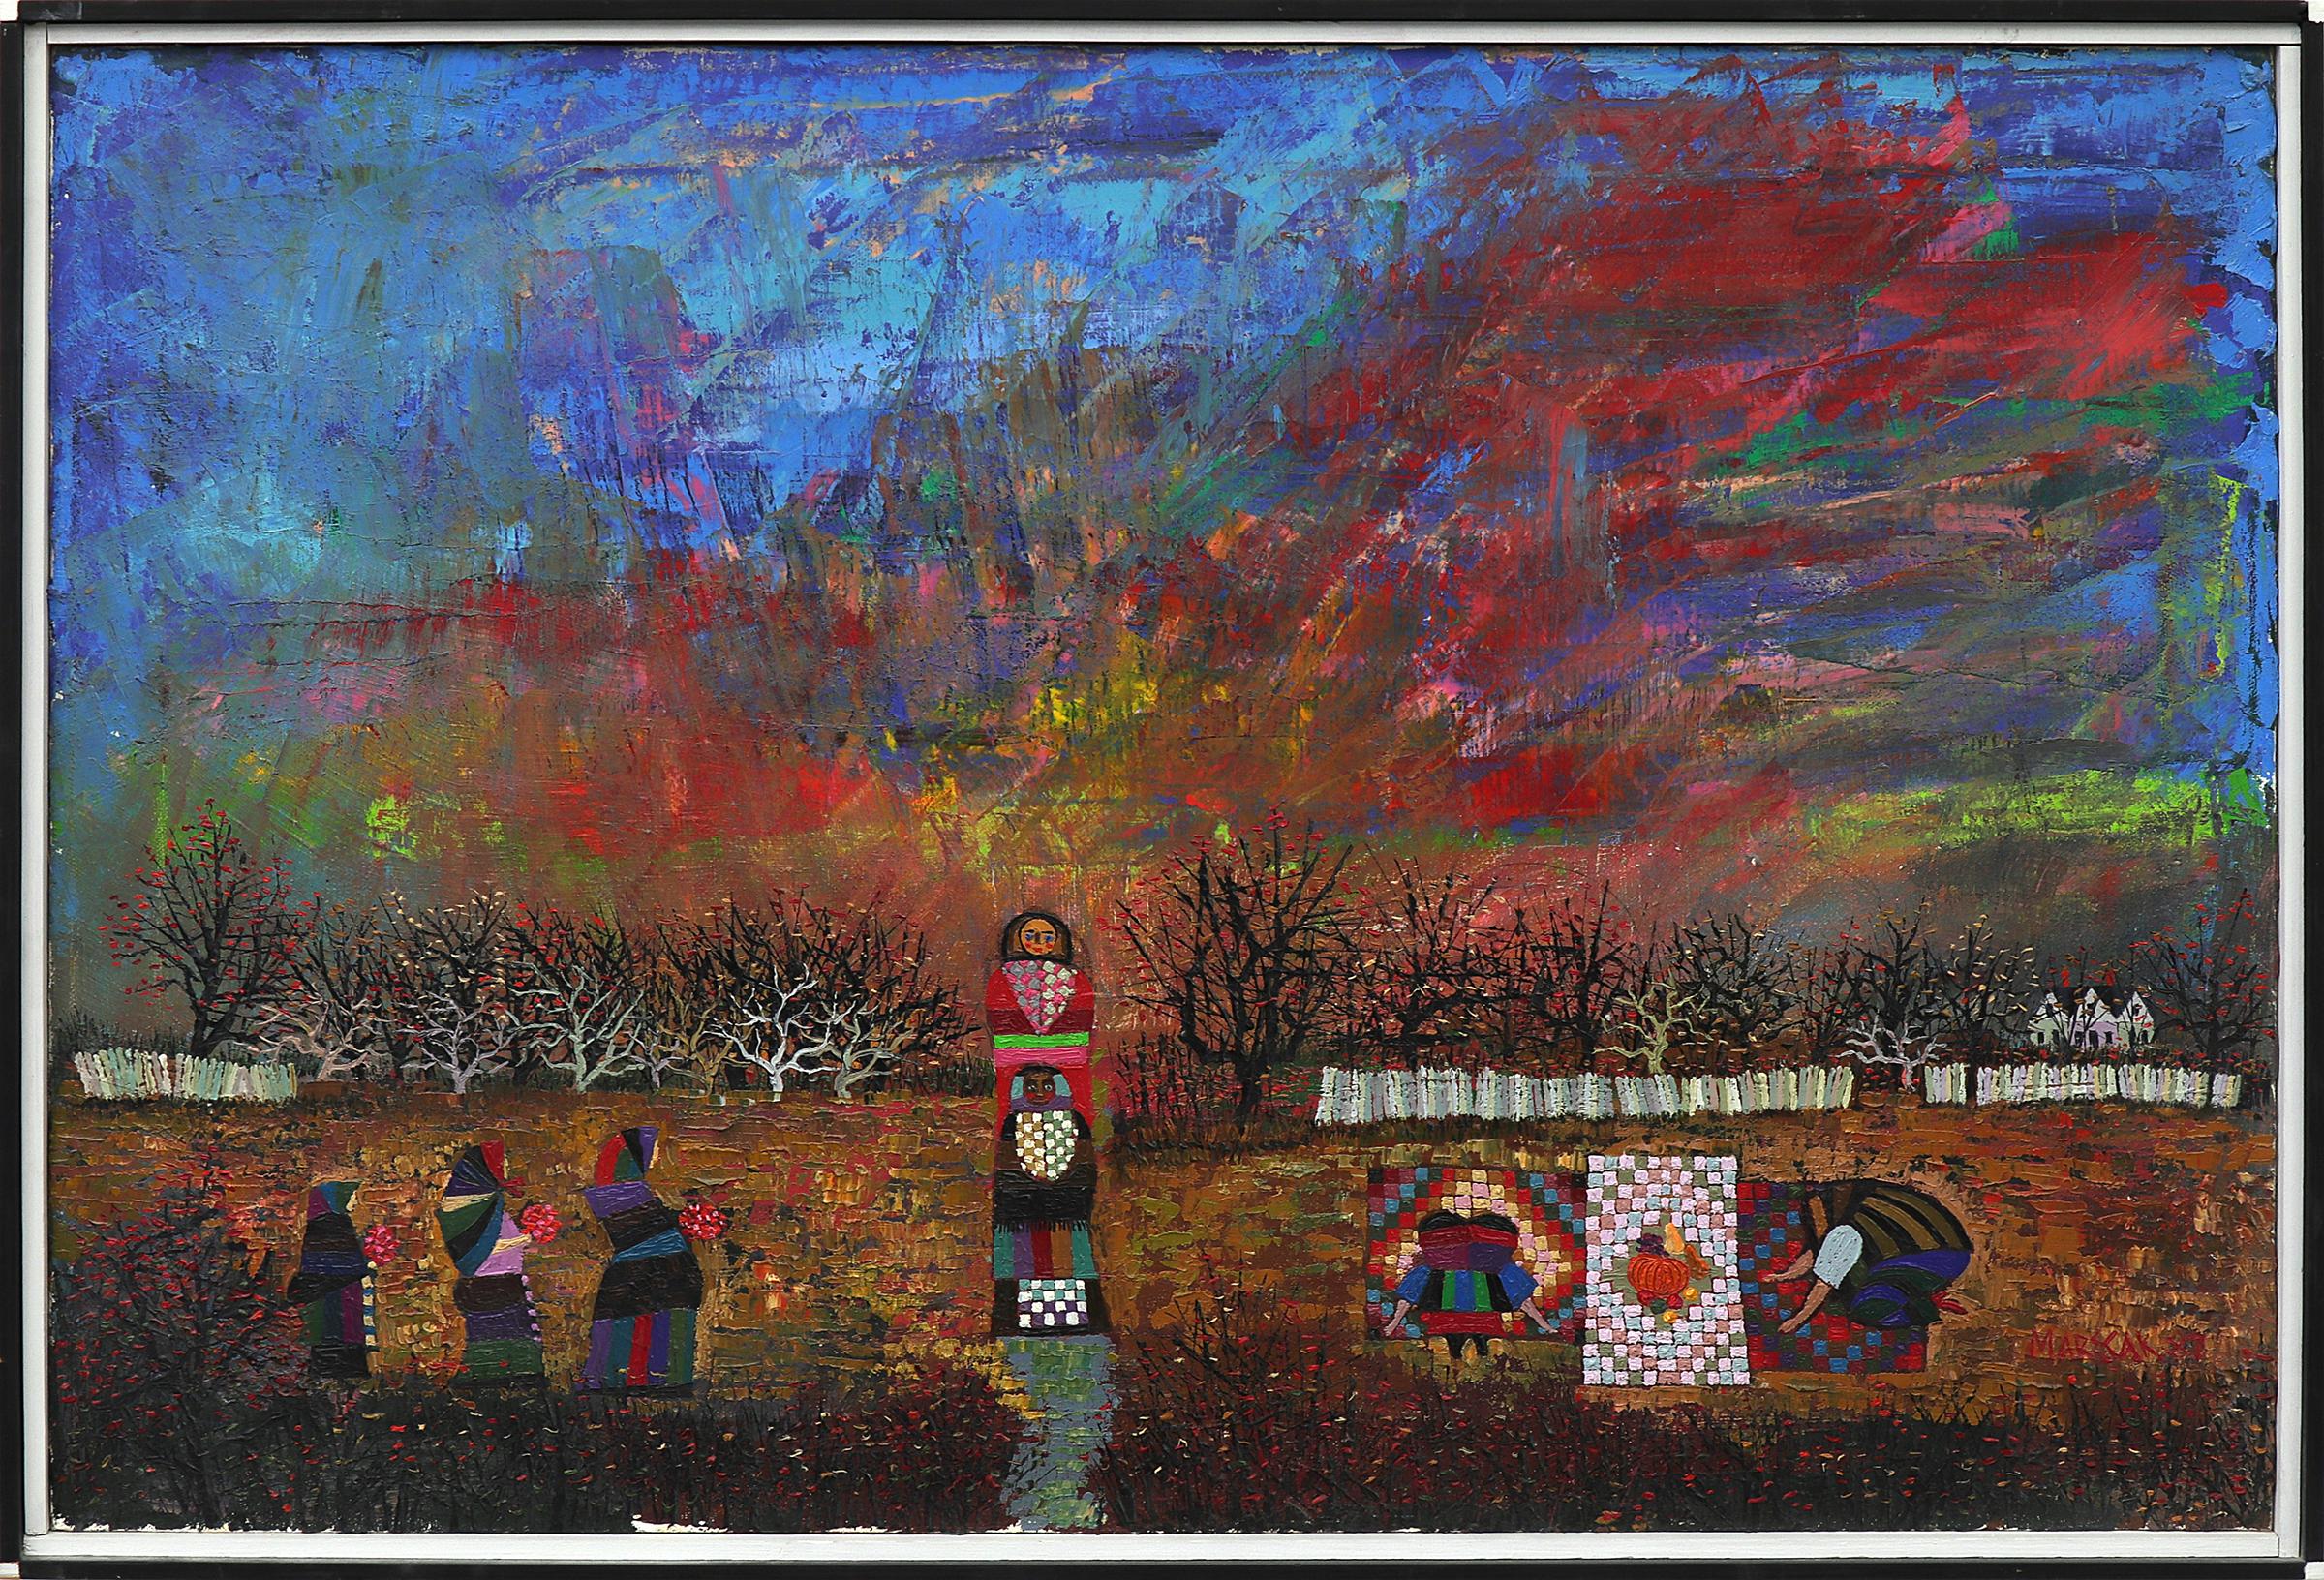 Edward Marecak Landscape Painting - Autumn Harvest, Original Semi-Abstract Landscape and Figurative Oil Painting 